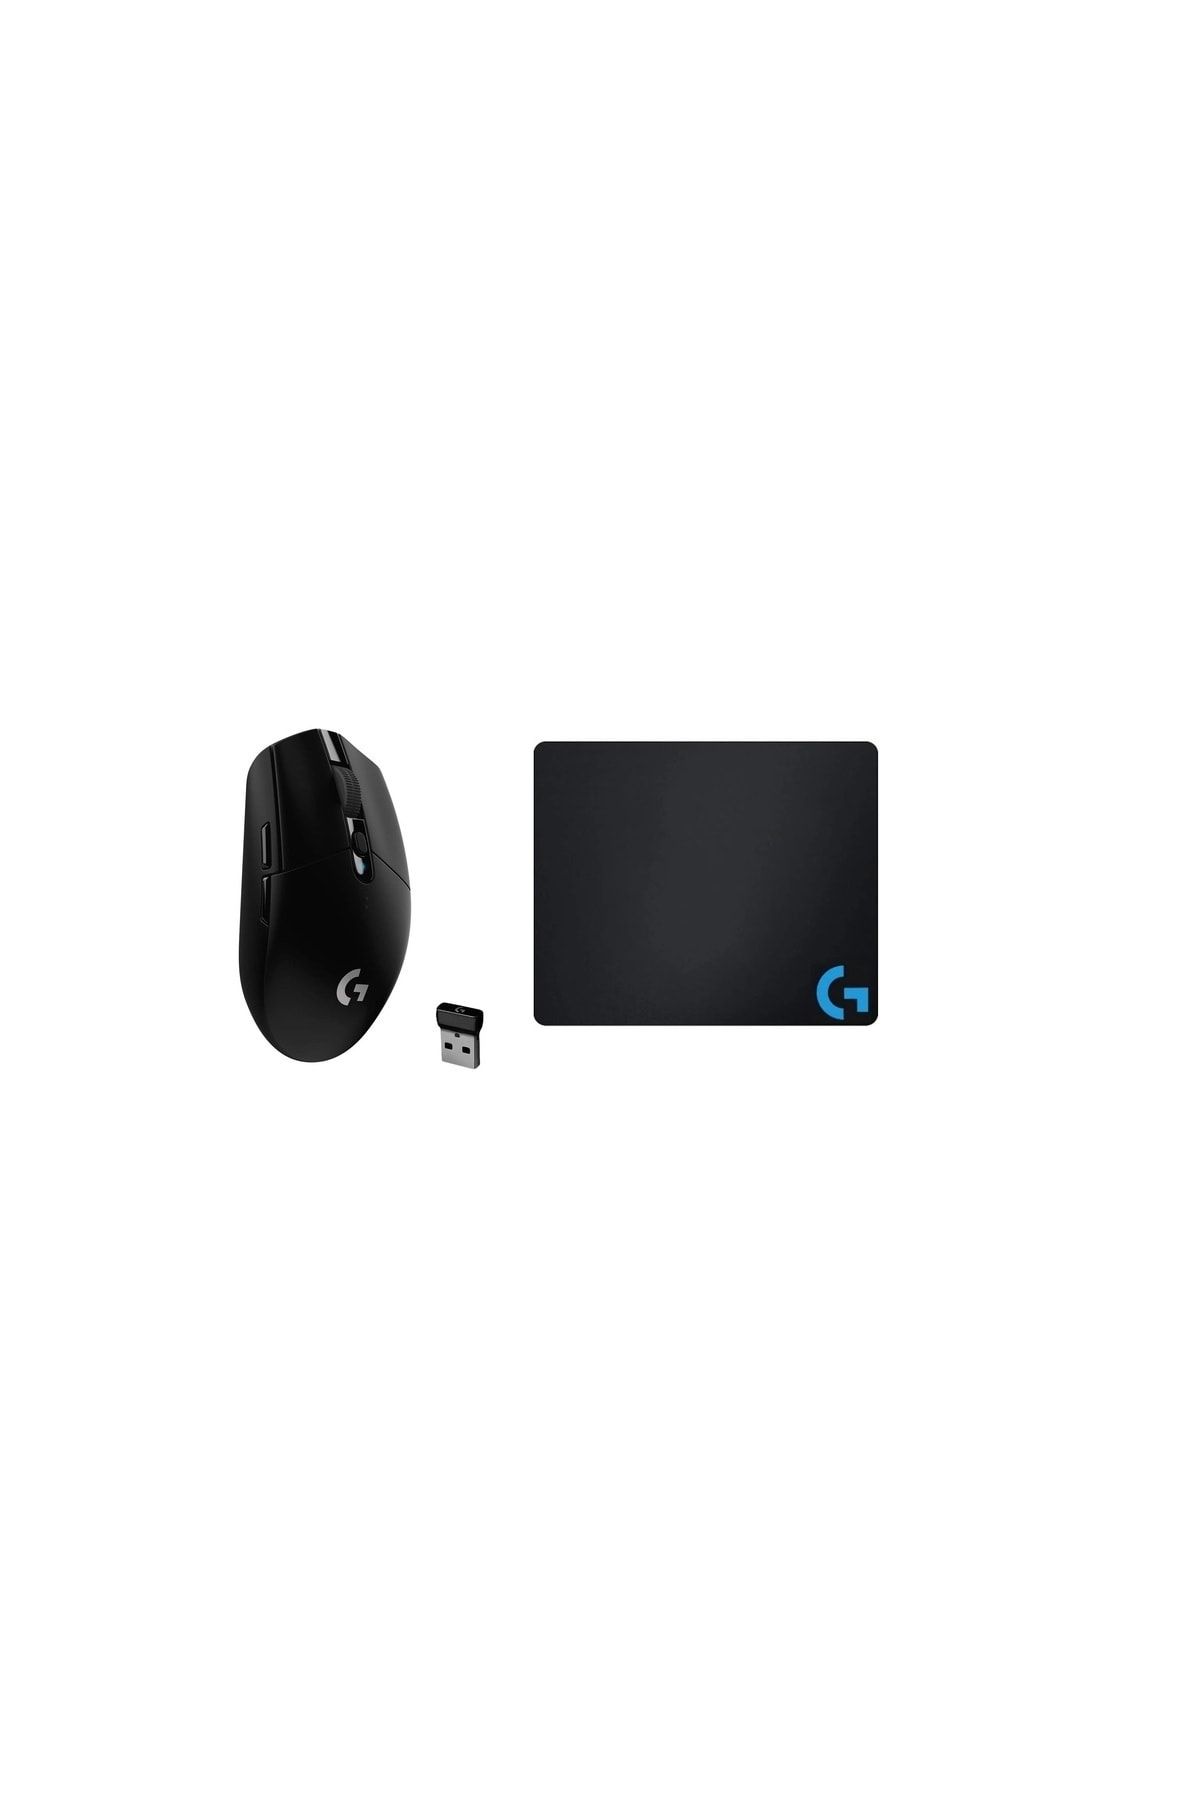 logitech G305 Siyah Kablosuz Gaming Mouse ve OEM Mouse Pad 40x30 cm